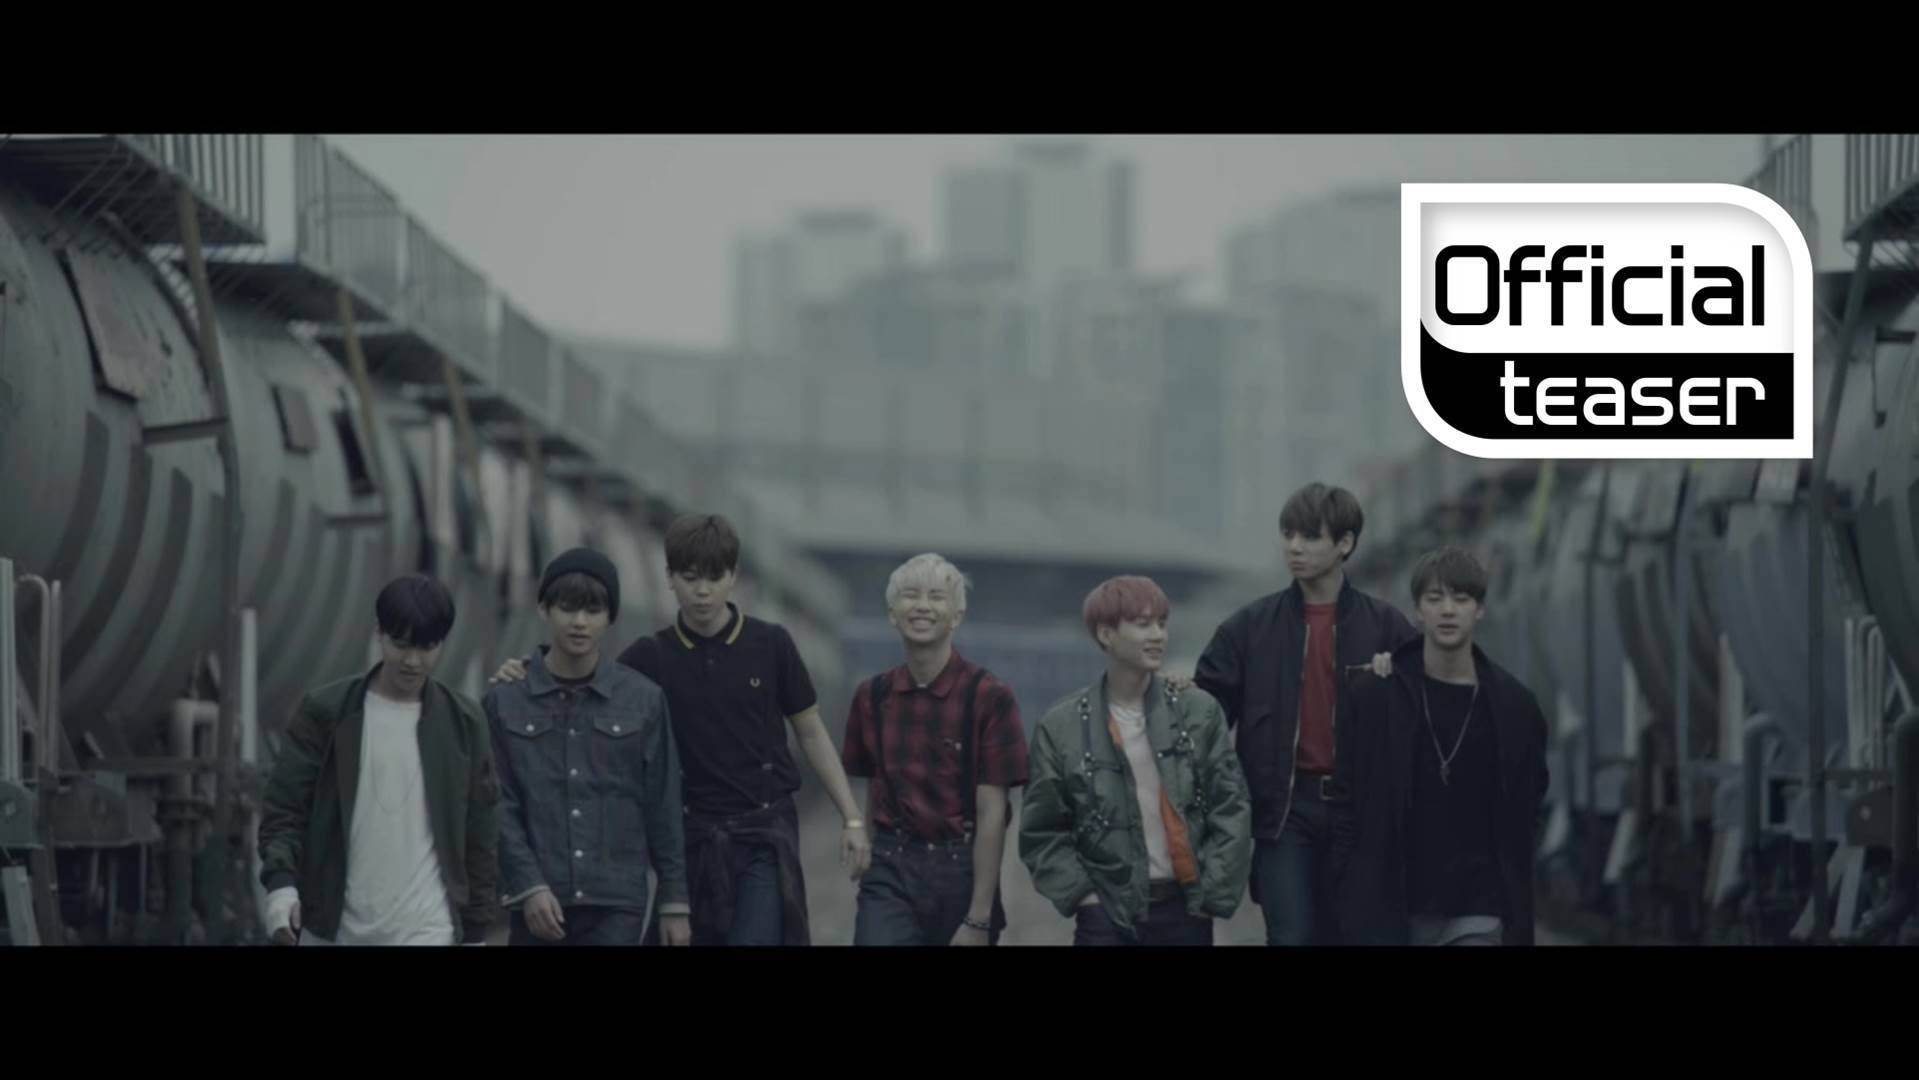 BTS croons "I Need U" in comeback video teaser